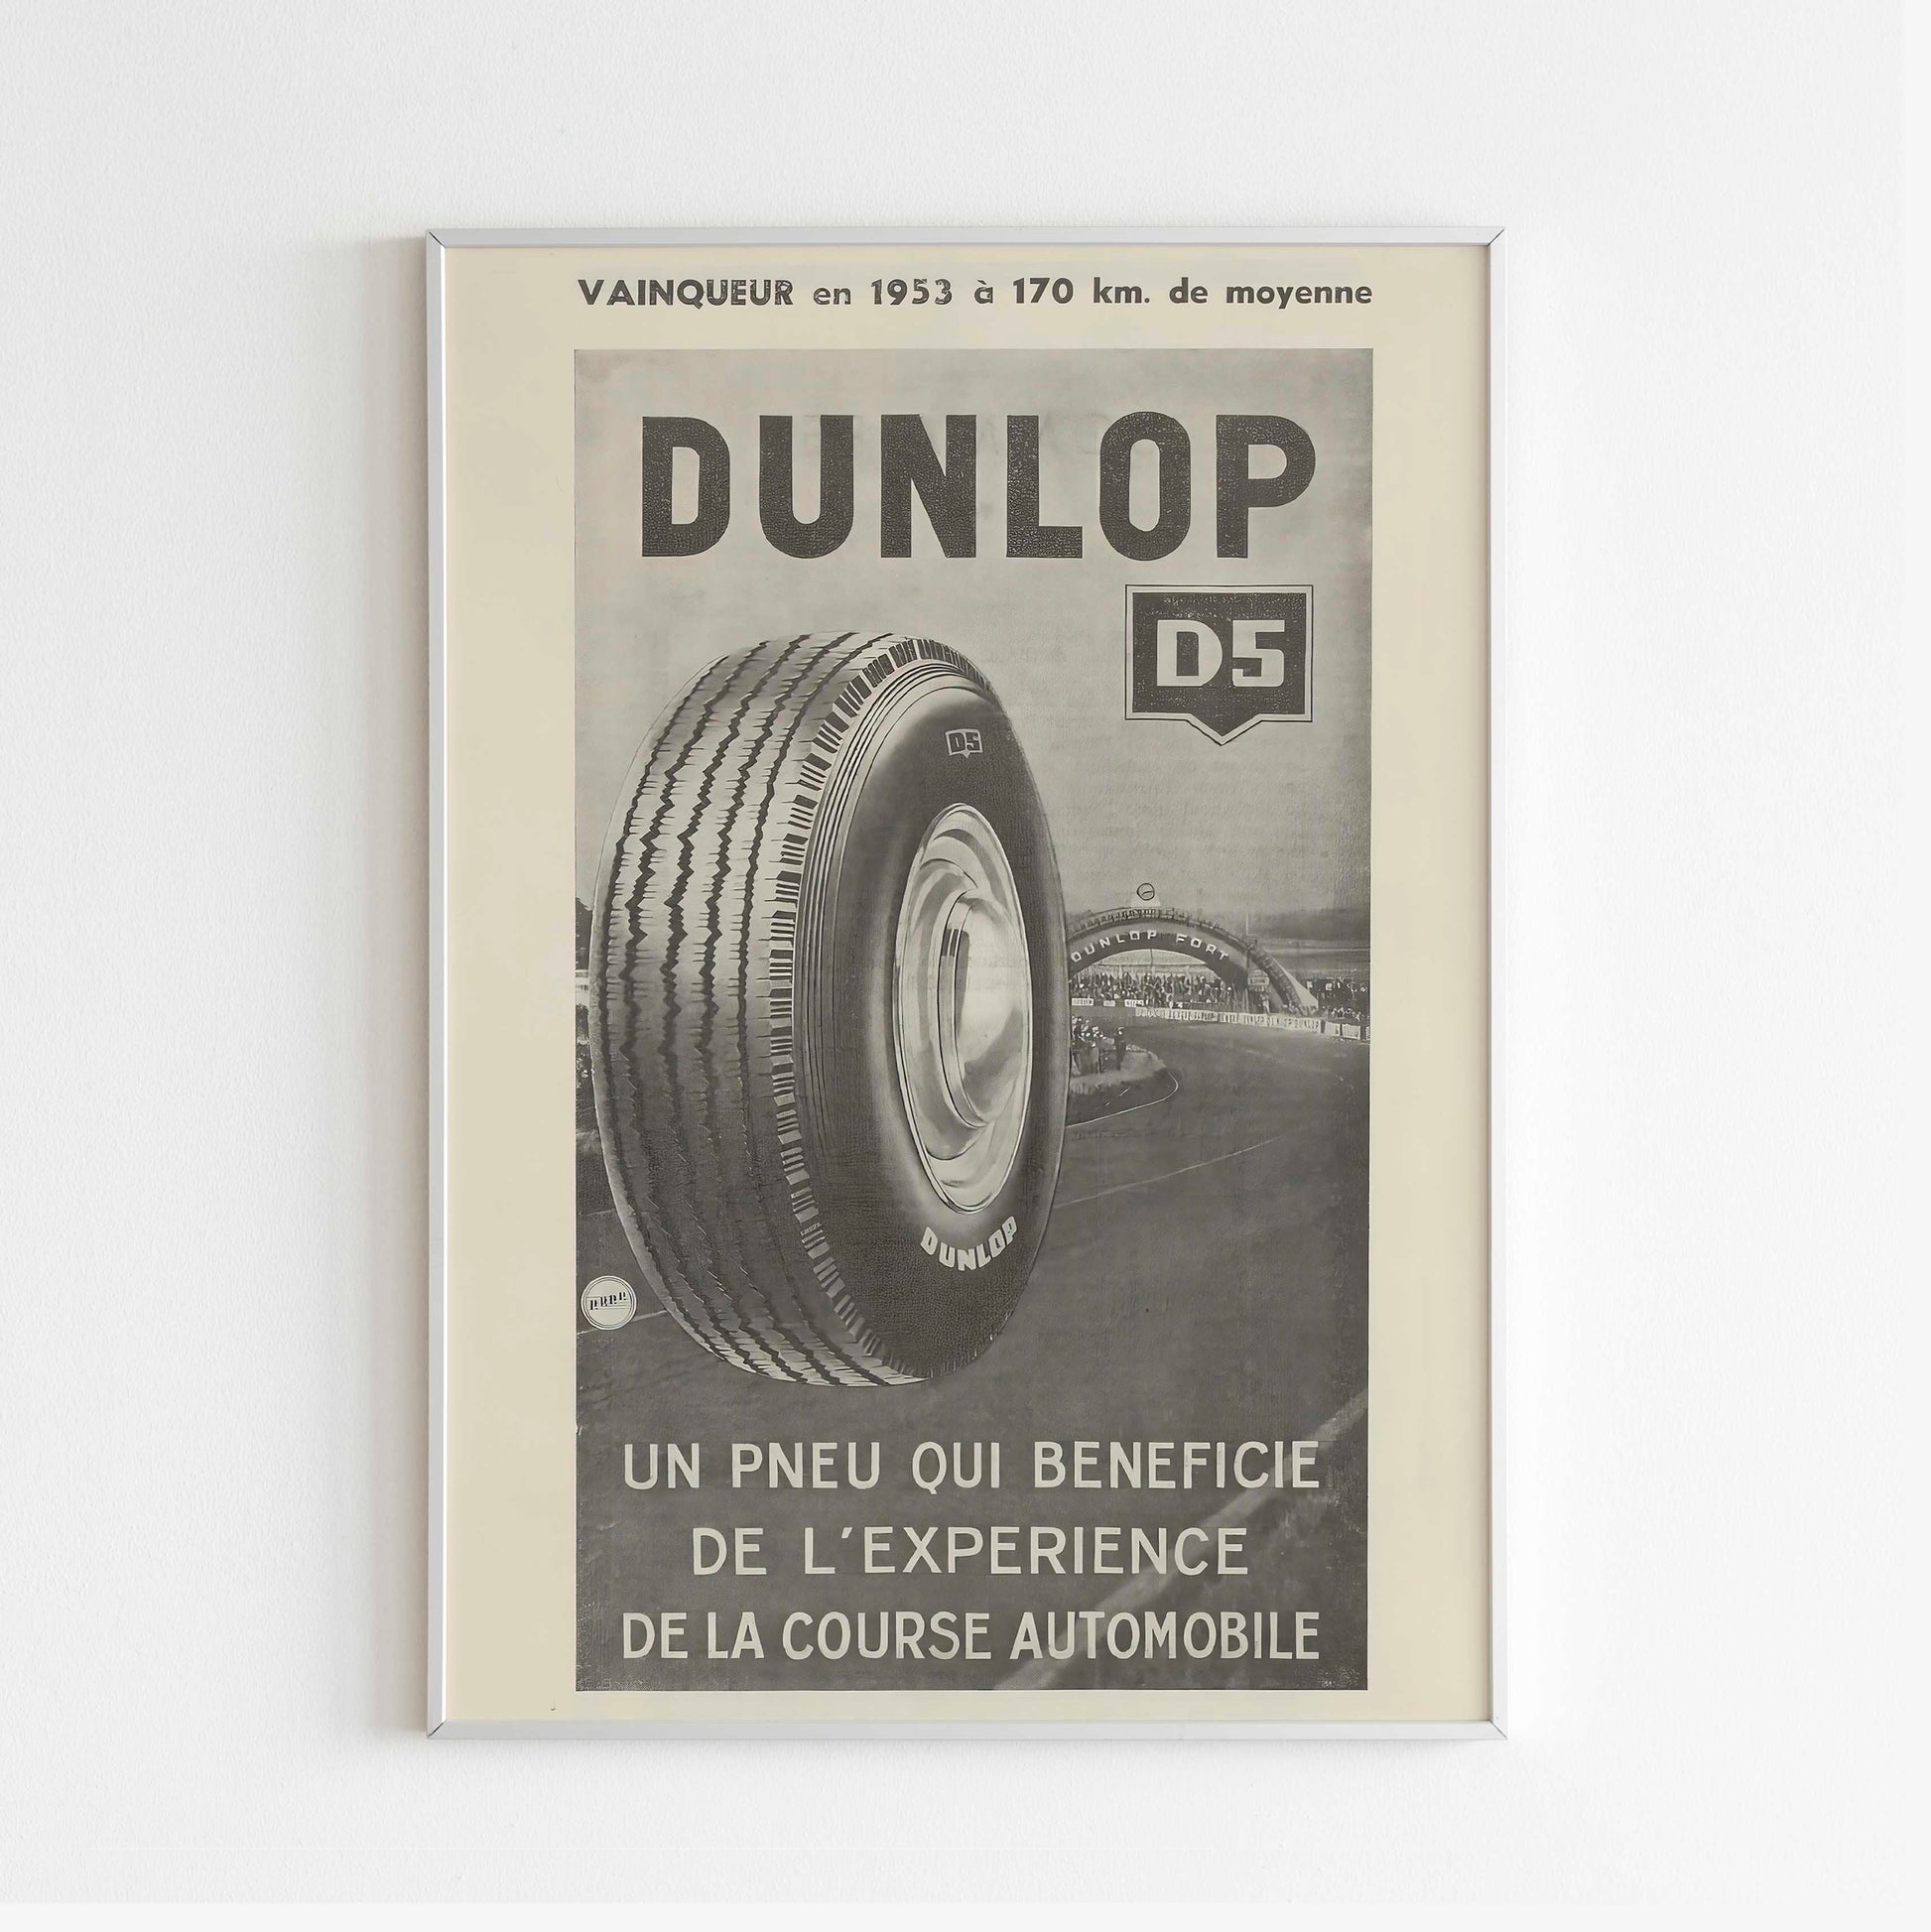 Dunlop Le Mans 24 Magazine Advertising Poster, Sport Car 60s / 50s Style Print, Vintage Design, Racing Ad Wall Art, Magazine Retro Advertisement